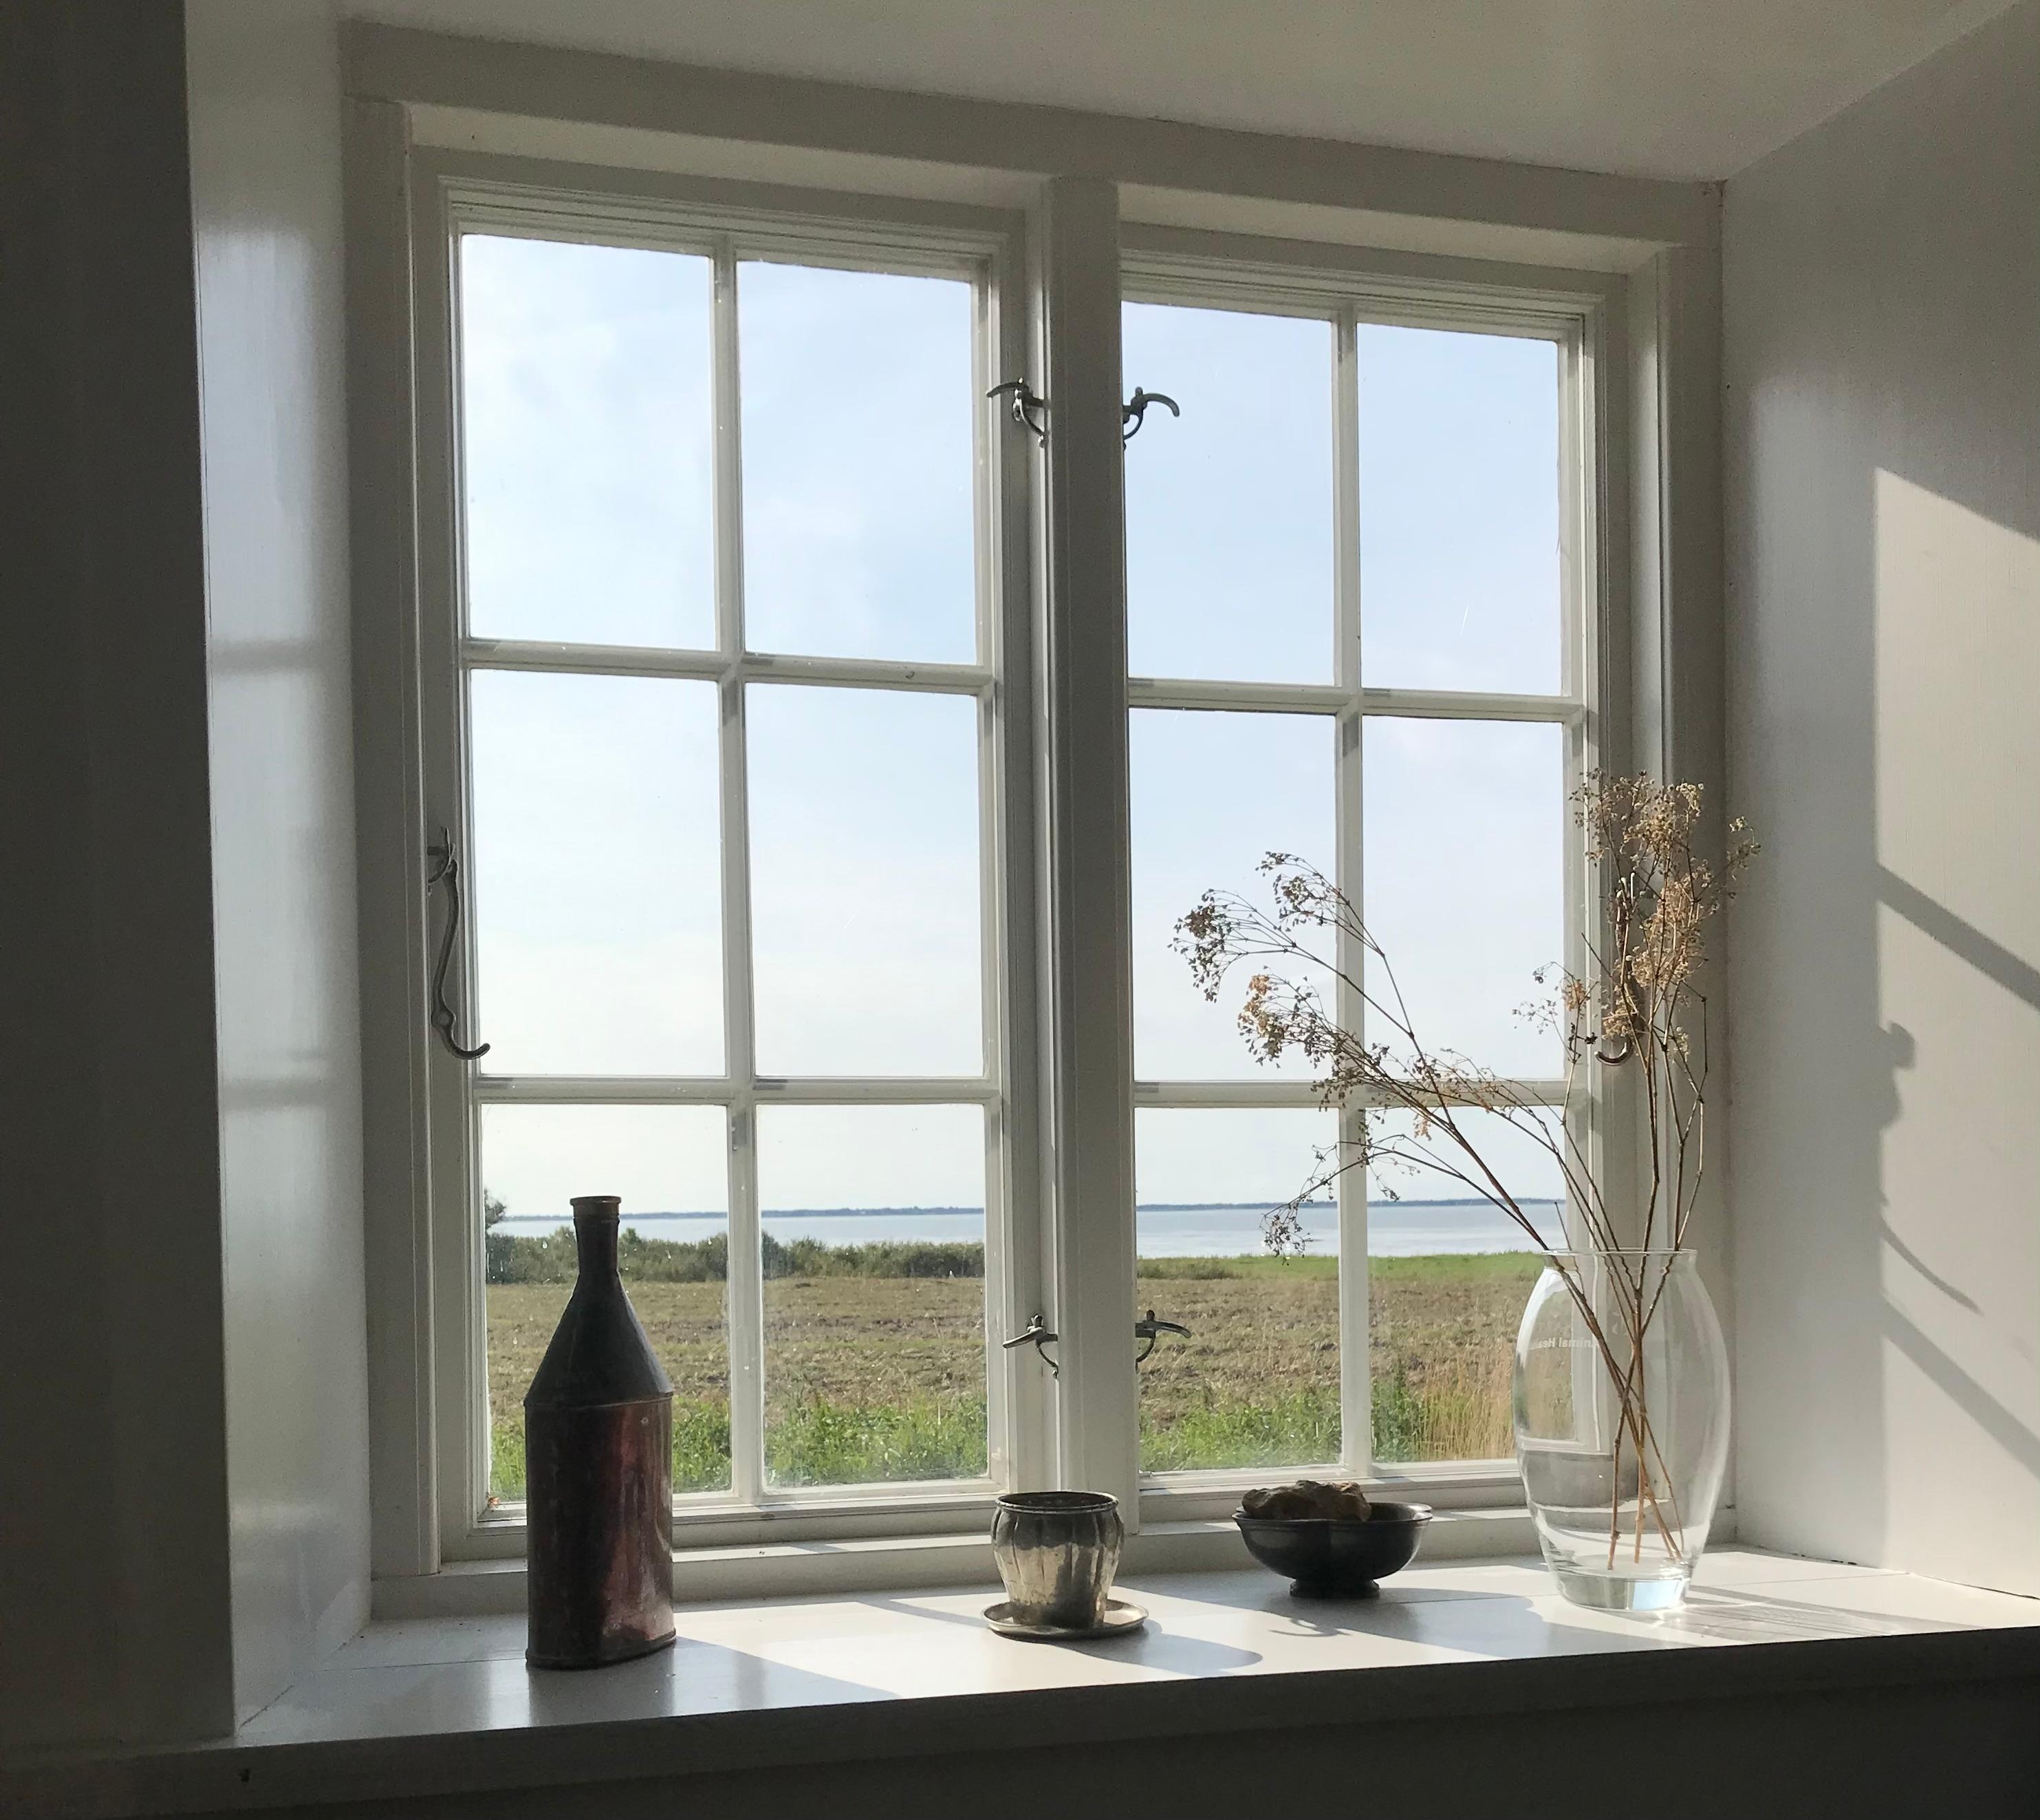 #Dänemark #Wattenmeer #Ferienhaus #Fenster #hygge #hyggeZeit #Ausblick